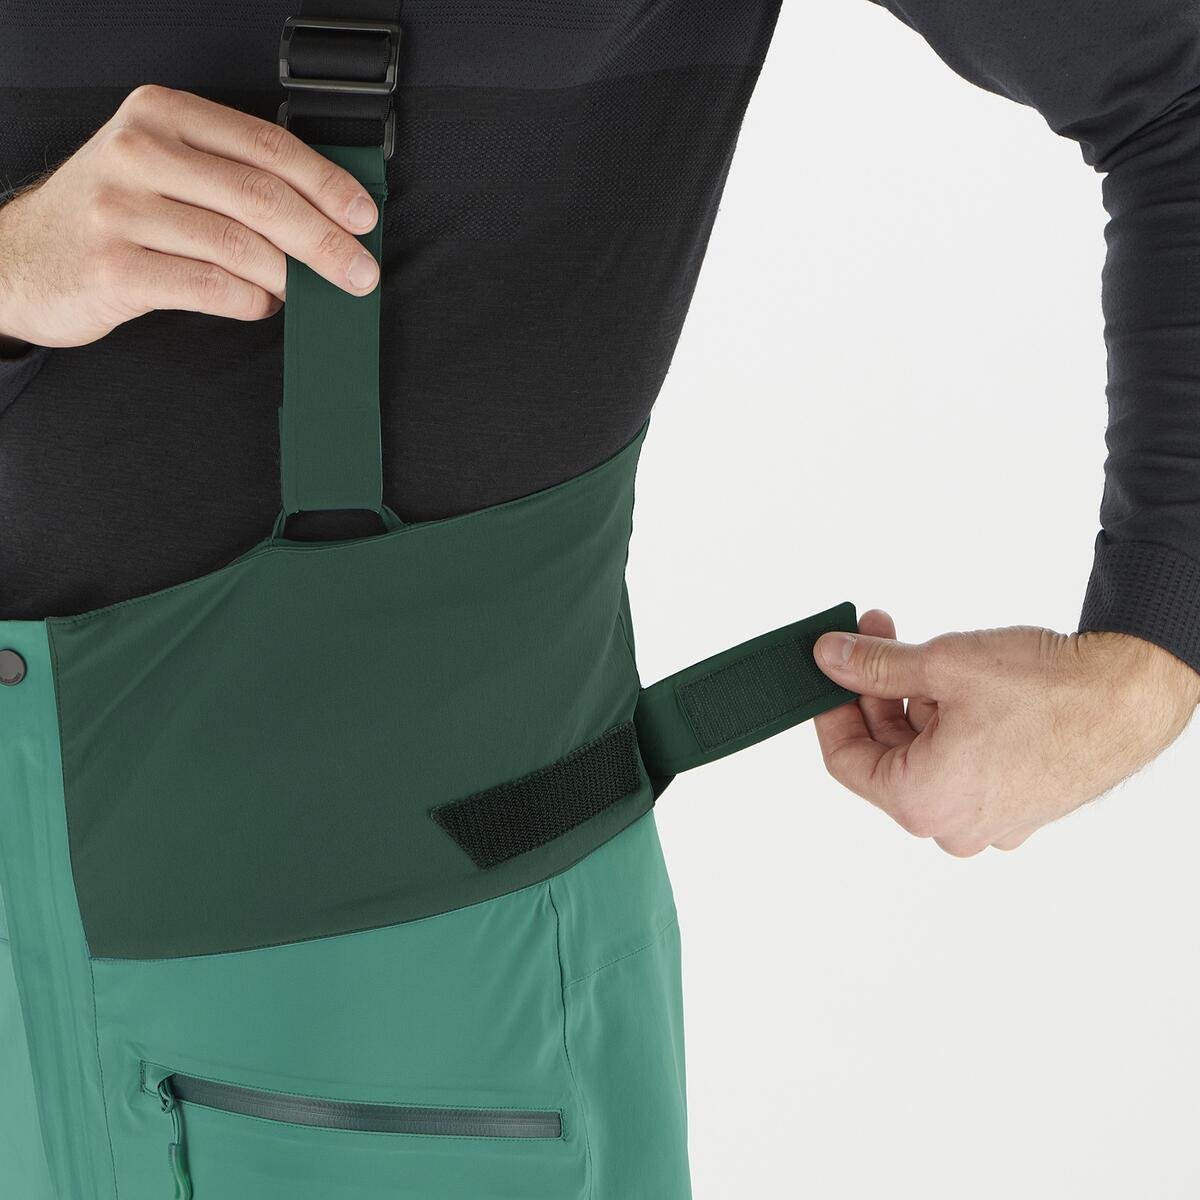 Nohavice Salomon Brilliant Suspenders M - zelená (predĺžená dĺžka)